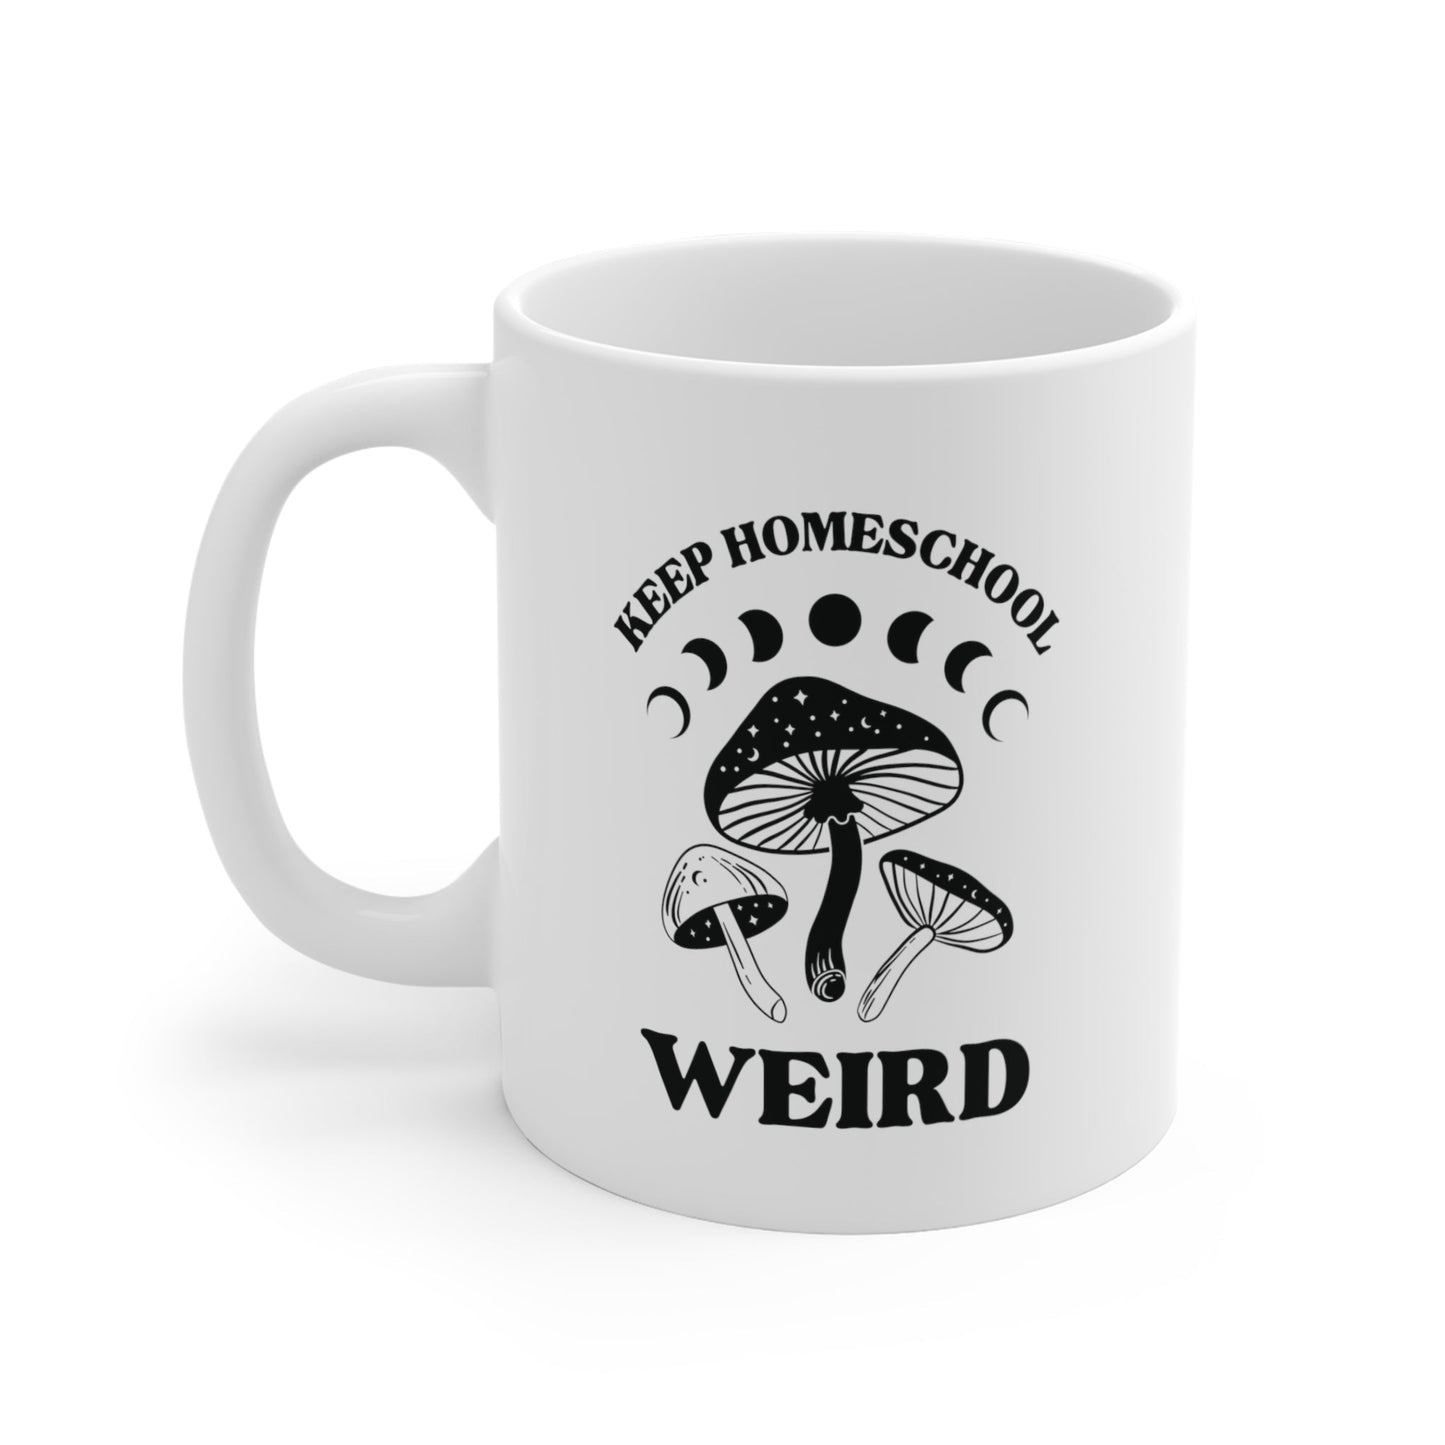 11 oz Keep Homeschool weird mug with mushrooms stars and moon phase